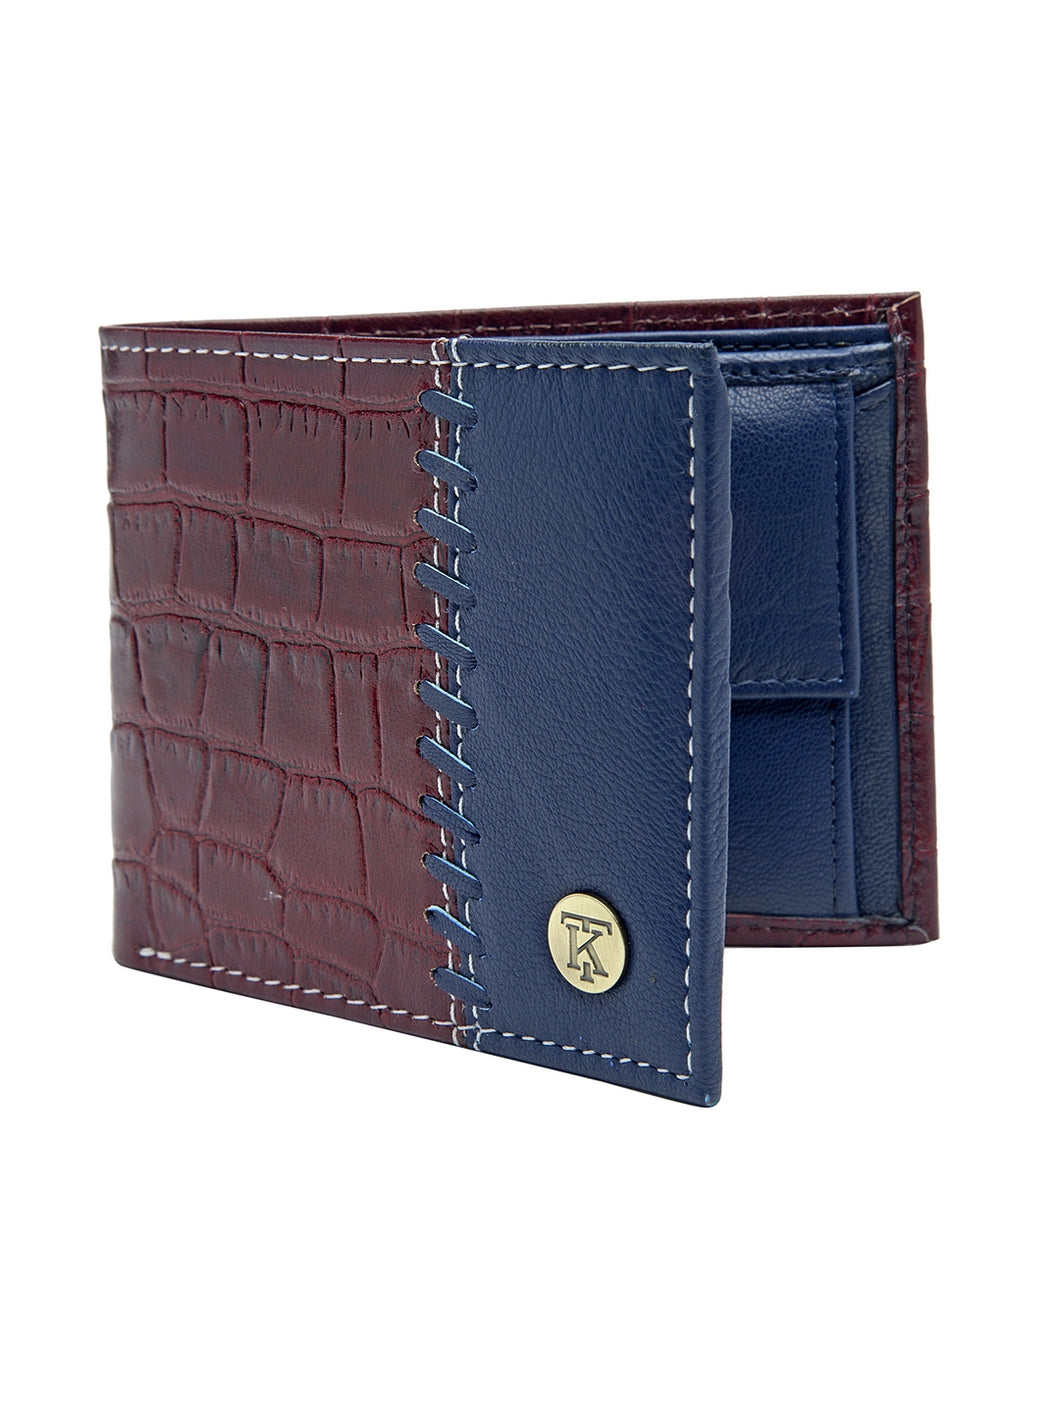 Teakwood Unisex Genuine Leather Maroon & Blue Bi Fold RFID Solid Wallet with Stitch Embroidery||Textured Maroon & Blue color 100% Genuine Leather Men's Wallet||Unisex Leather Bi Fold Wallet